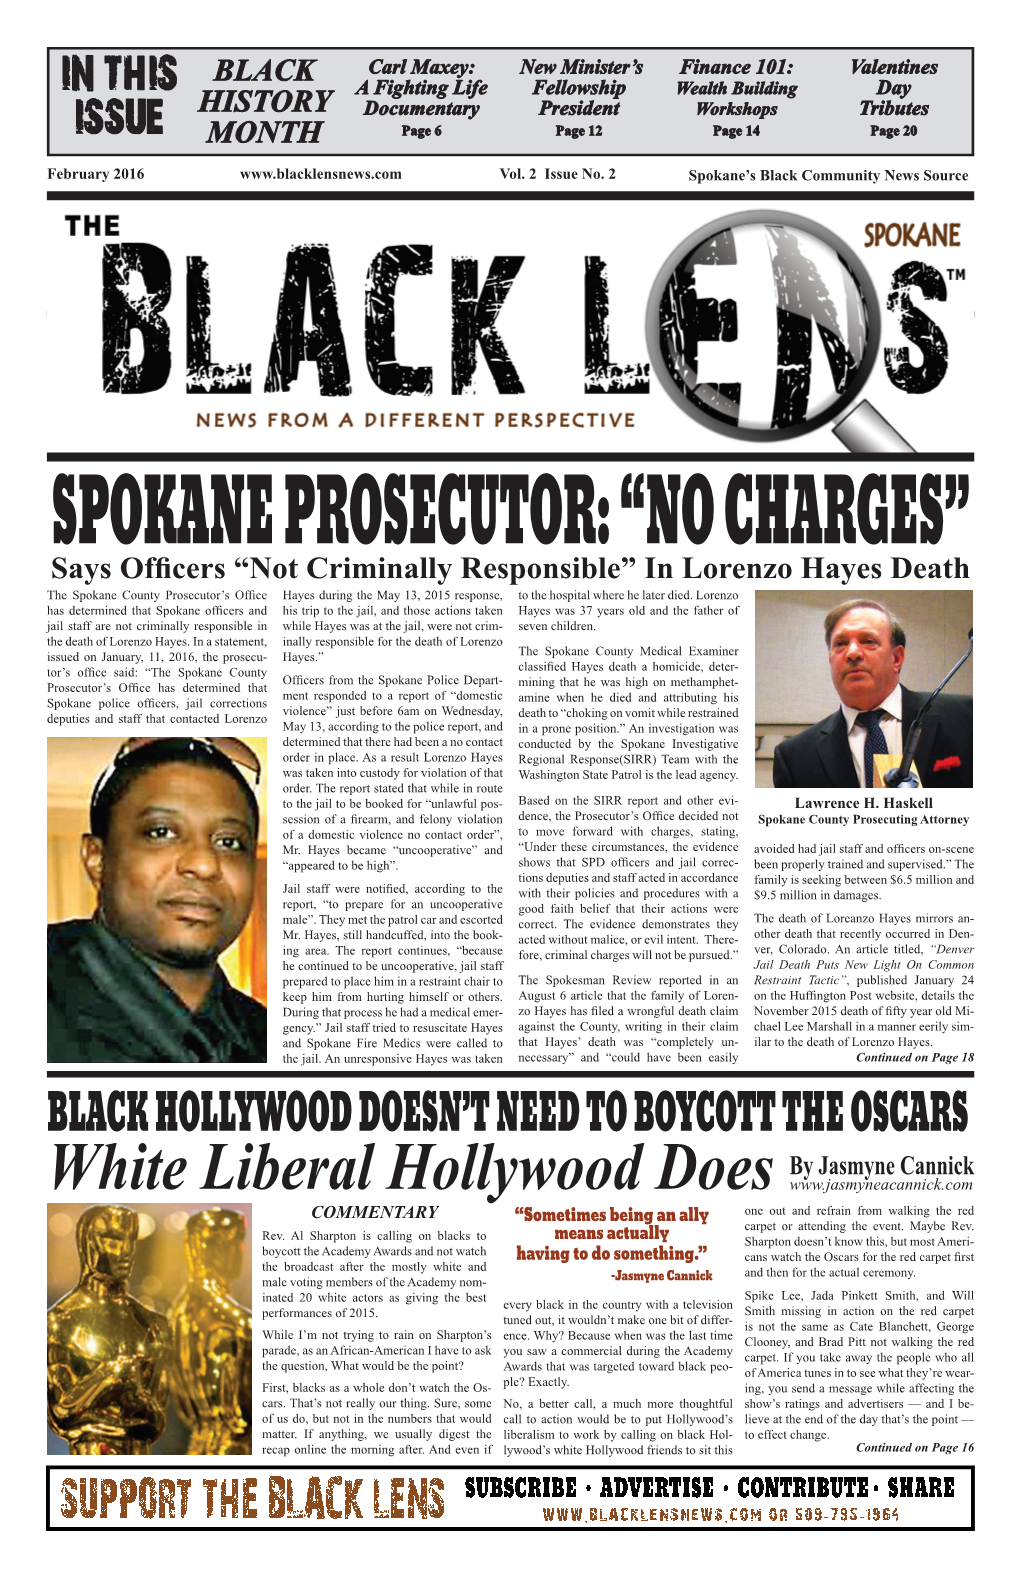 Spokane Prosecutor: “No Charges”